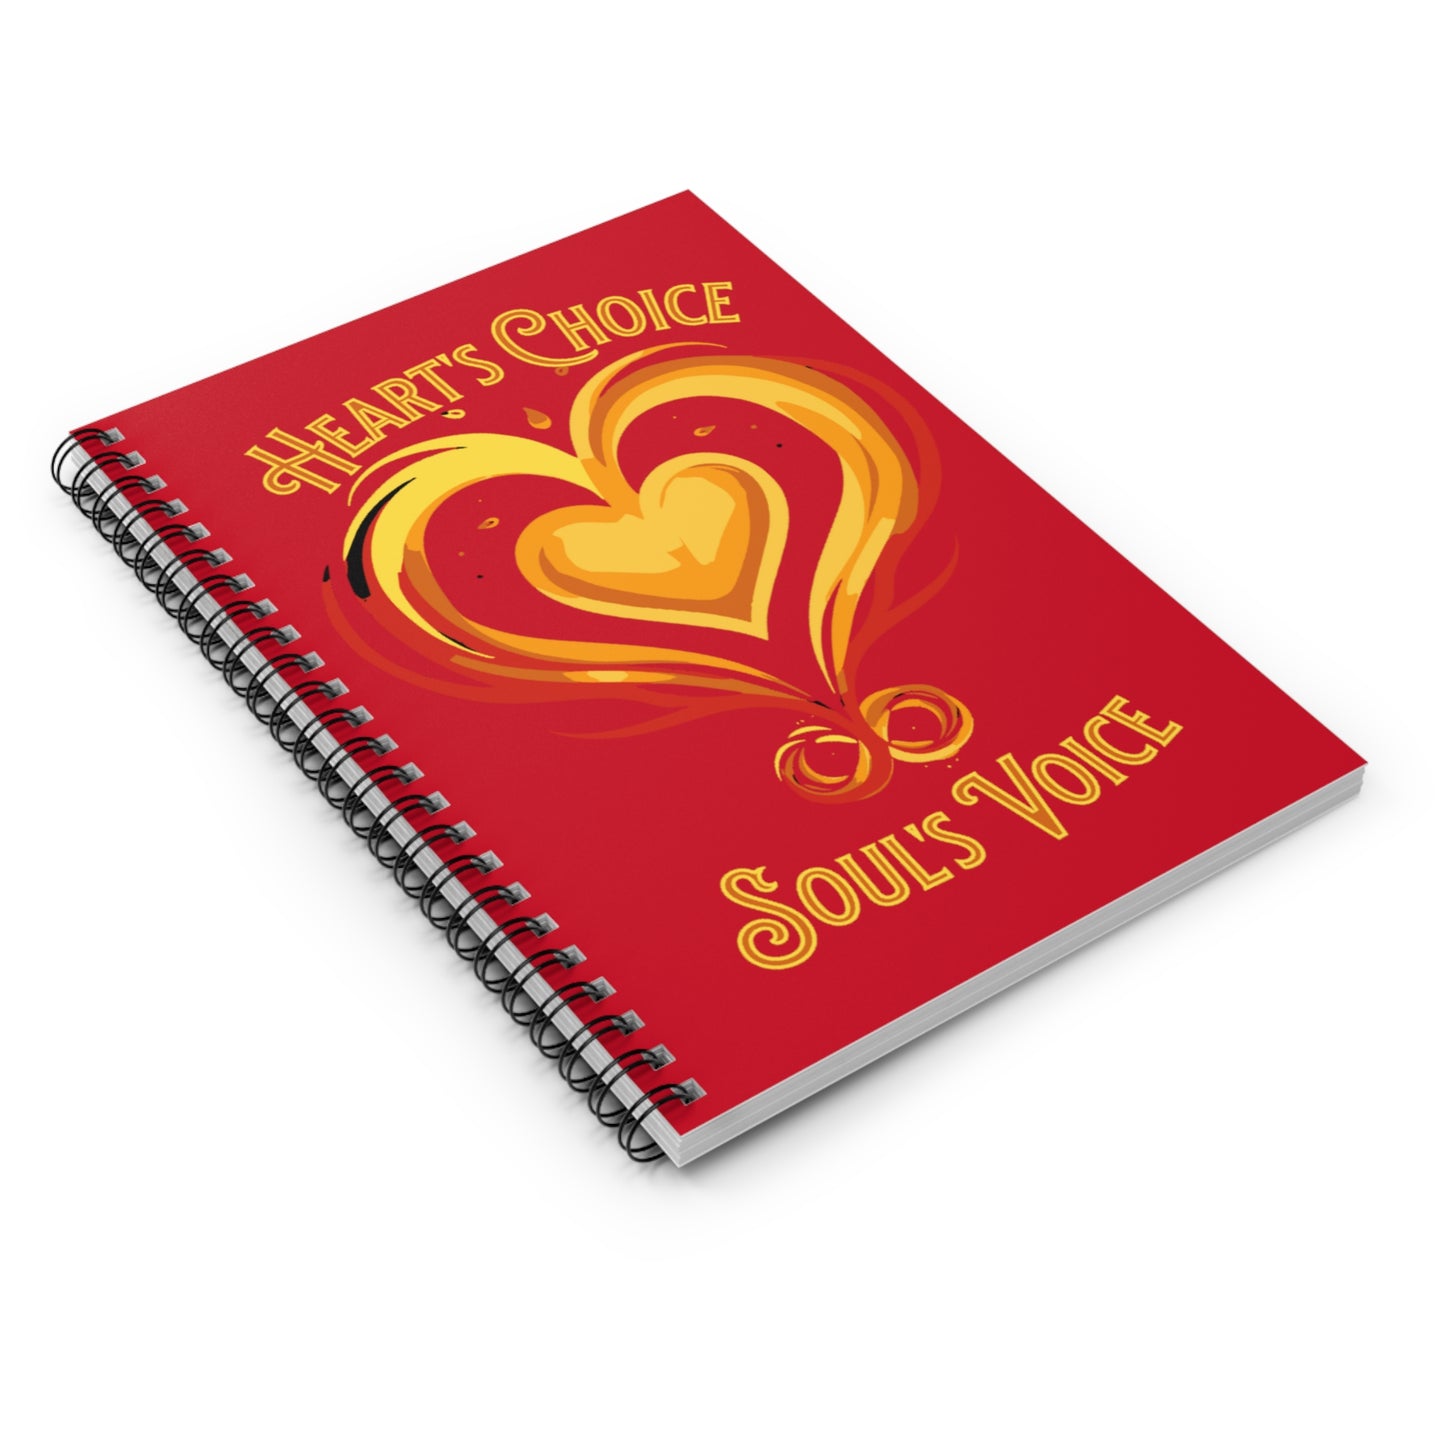 Heart's Choice | Spiral Notebook - Ruled Line